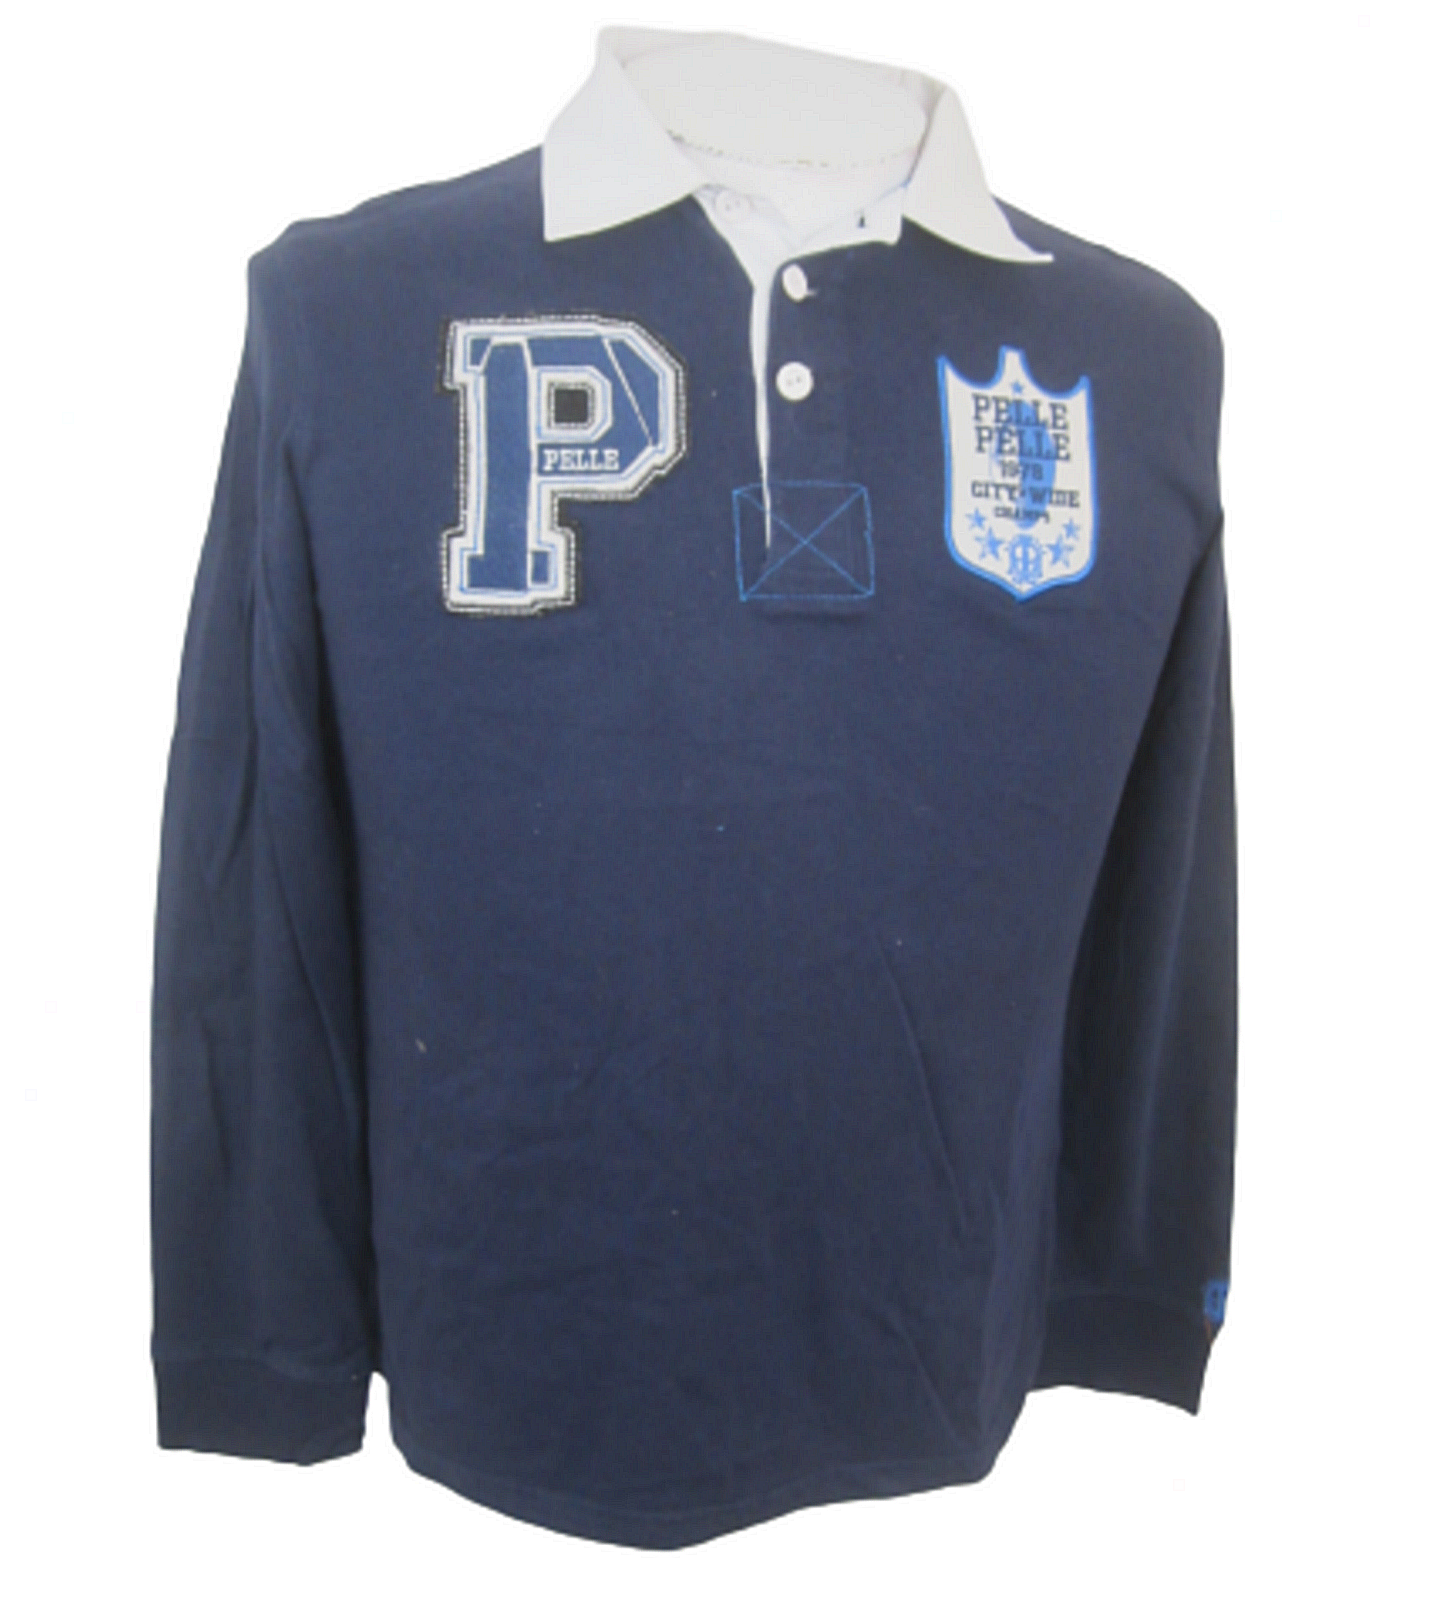 Pelle Pelle  Boys Polo shirt long sleeve rugby sz 14-16 cotton collared blue - $17.81